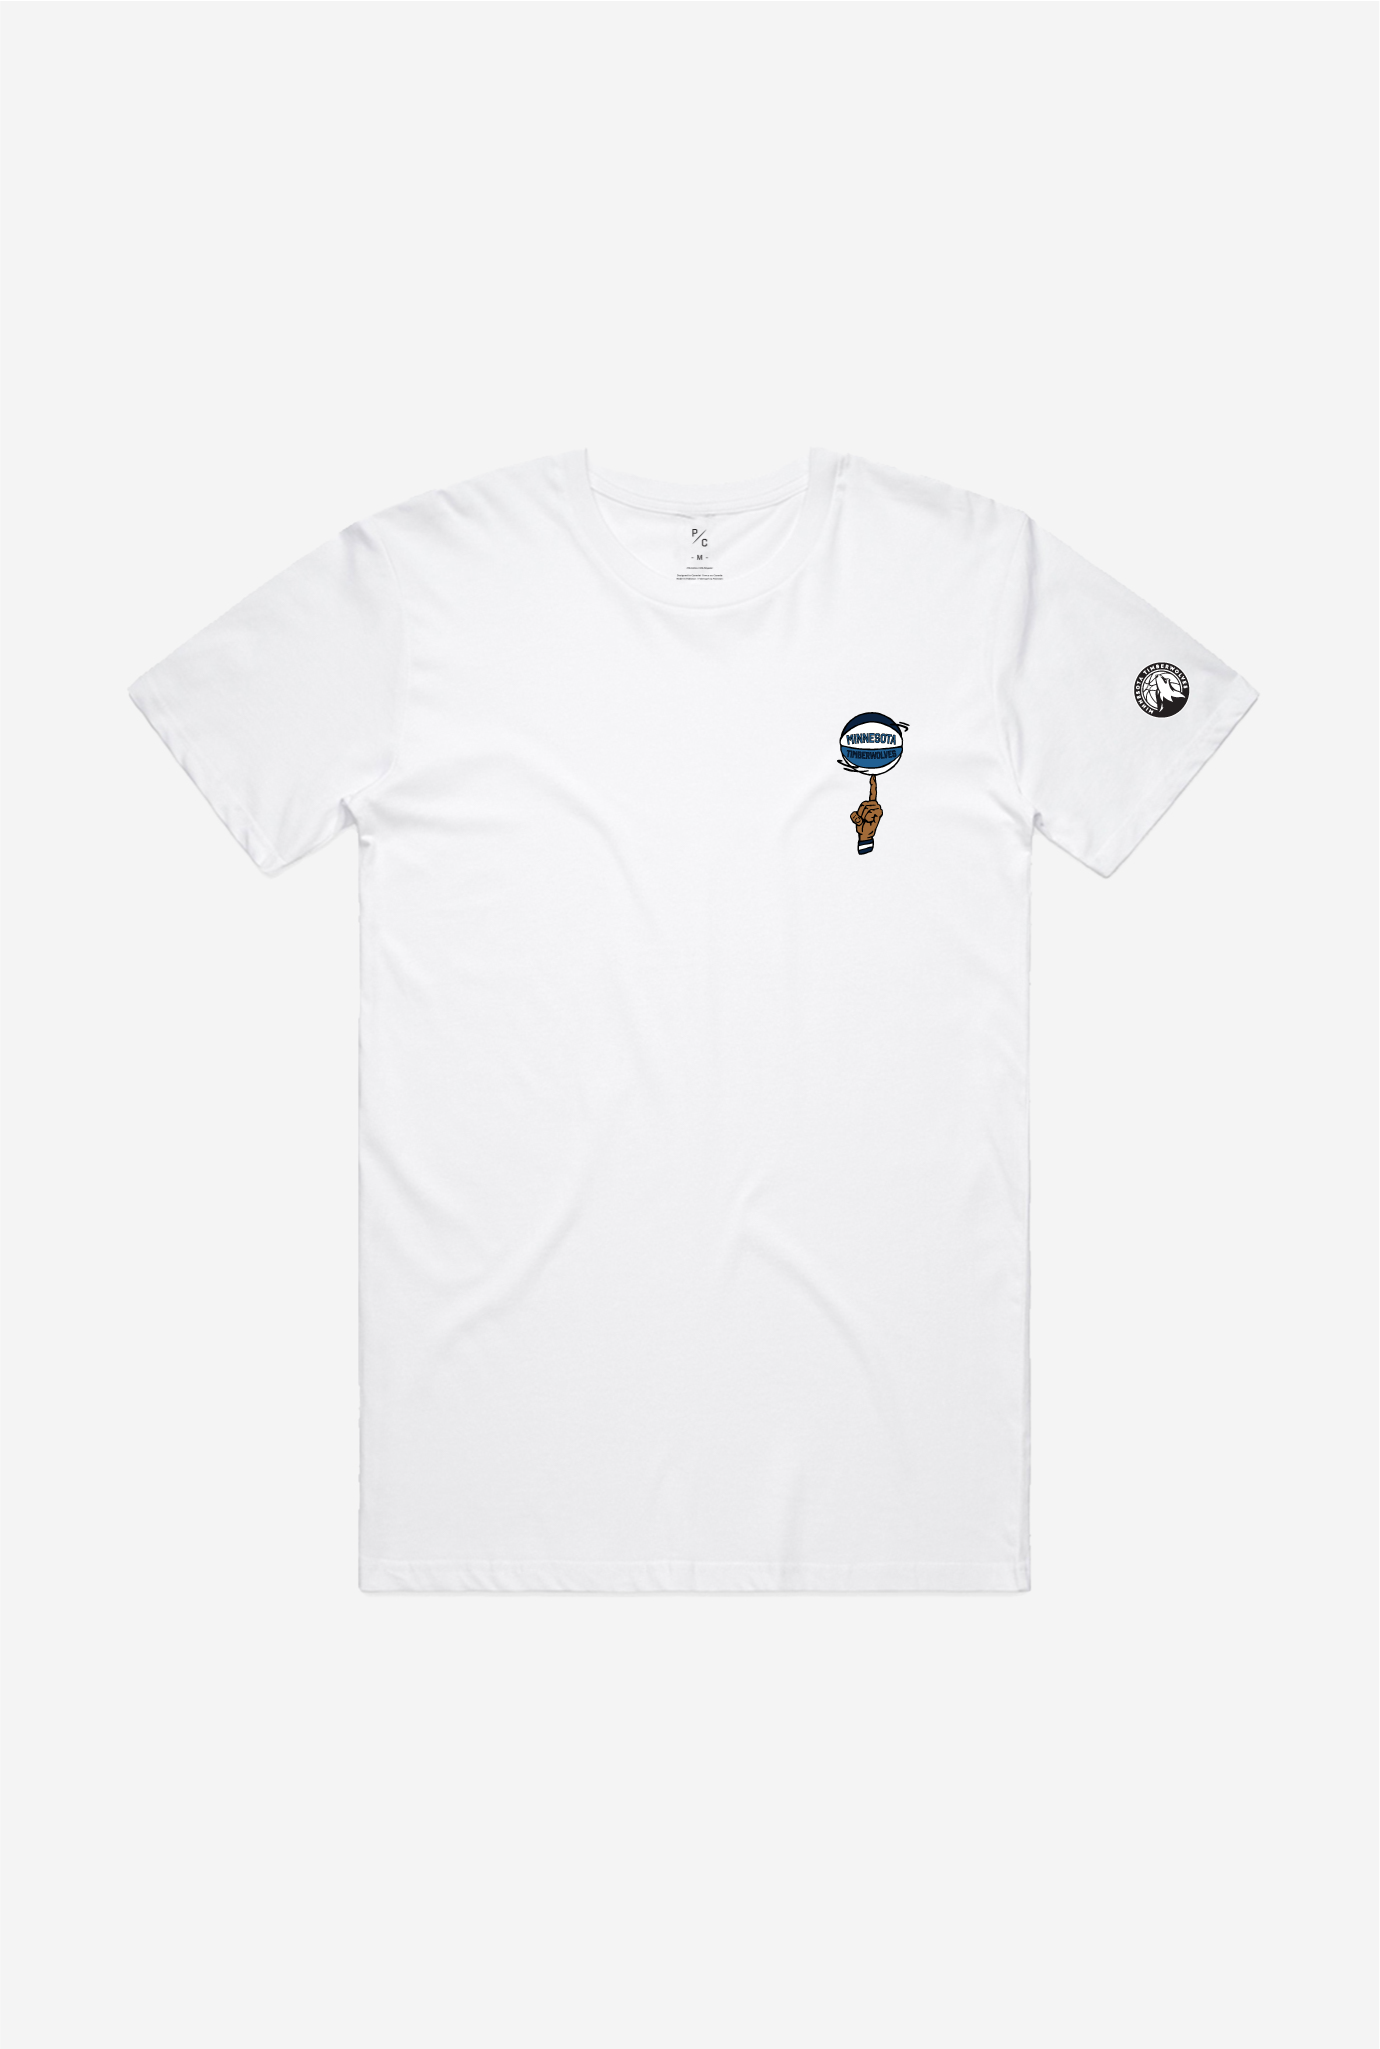 Minnesota Timberwolves Spinning Ball T-Shirt - White